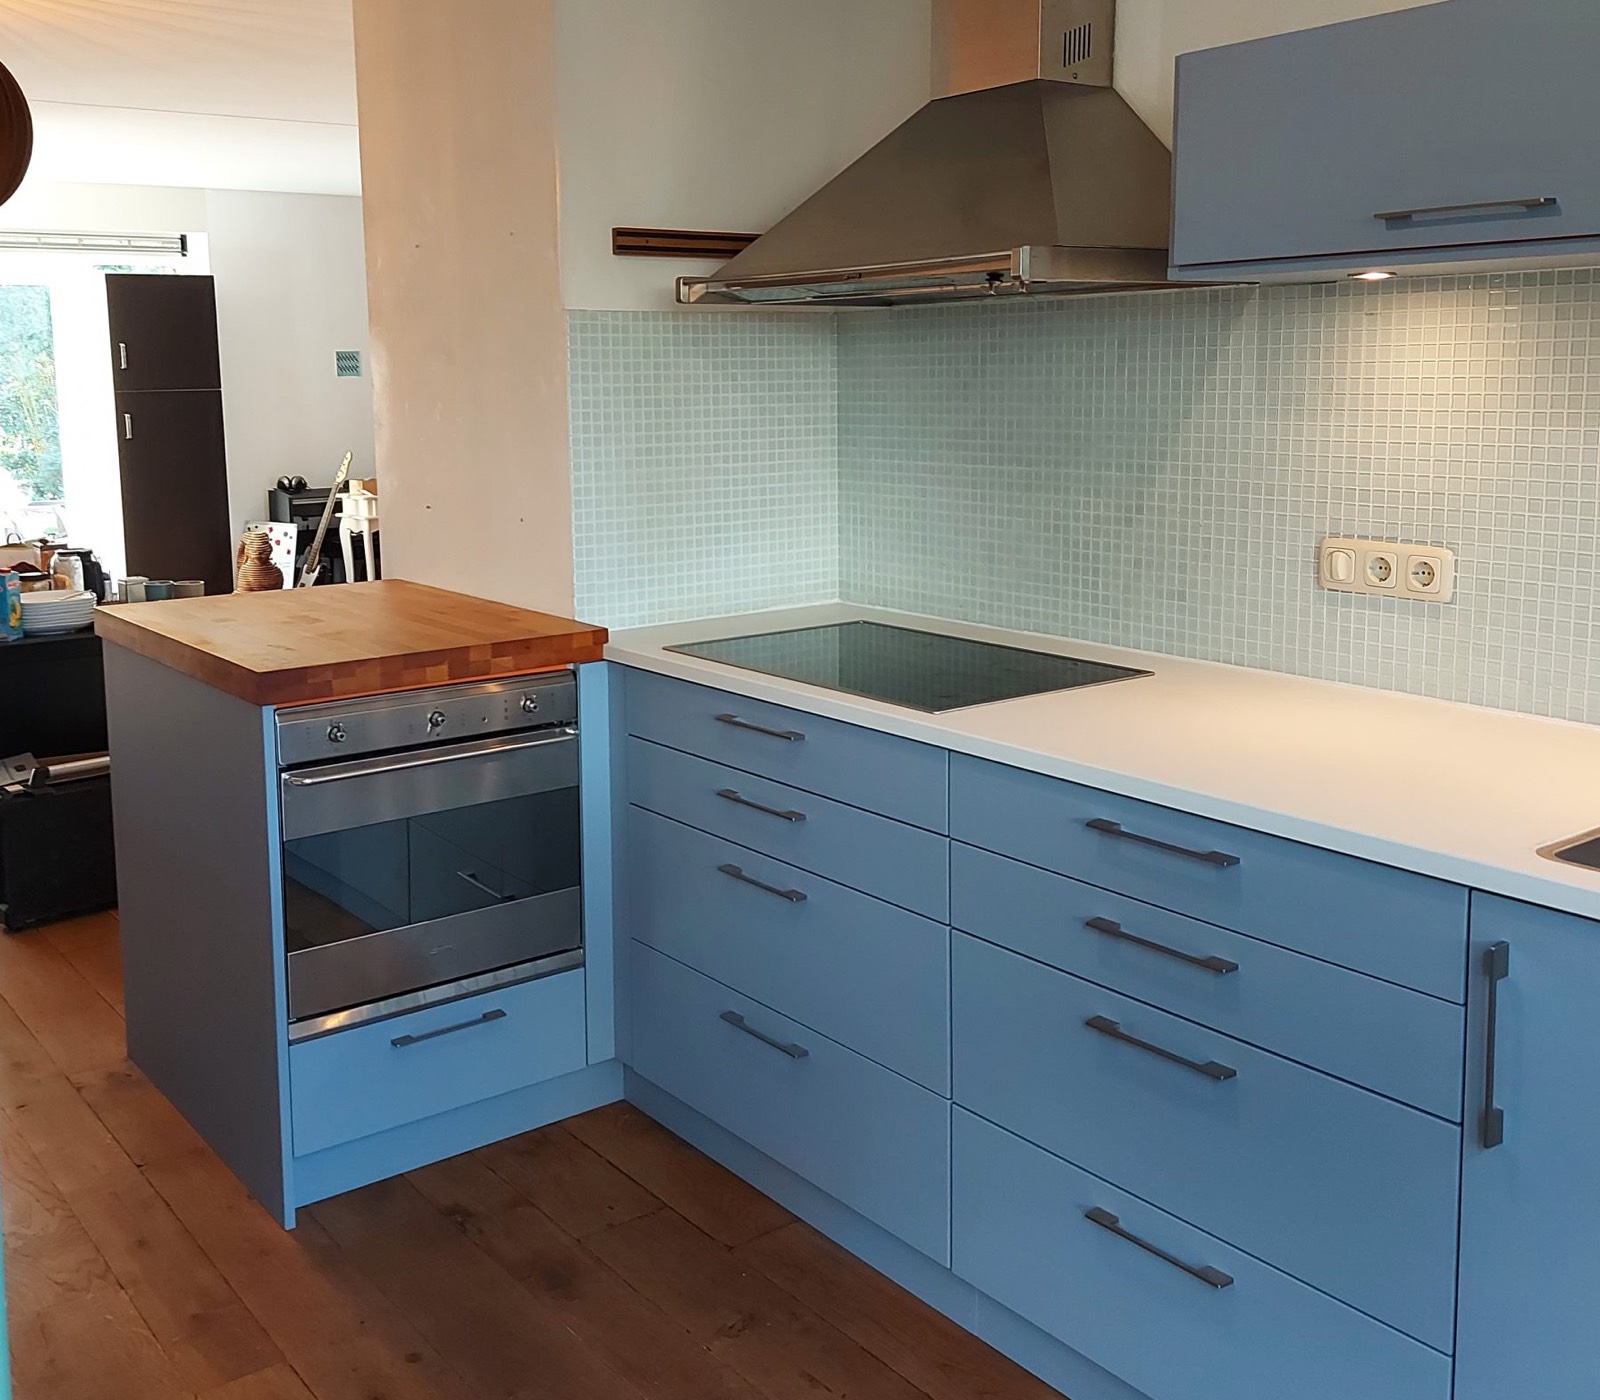 blauw-keuken-na-prokeukenrenovatie-keuken-renoveren